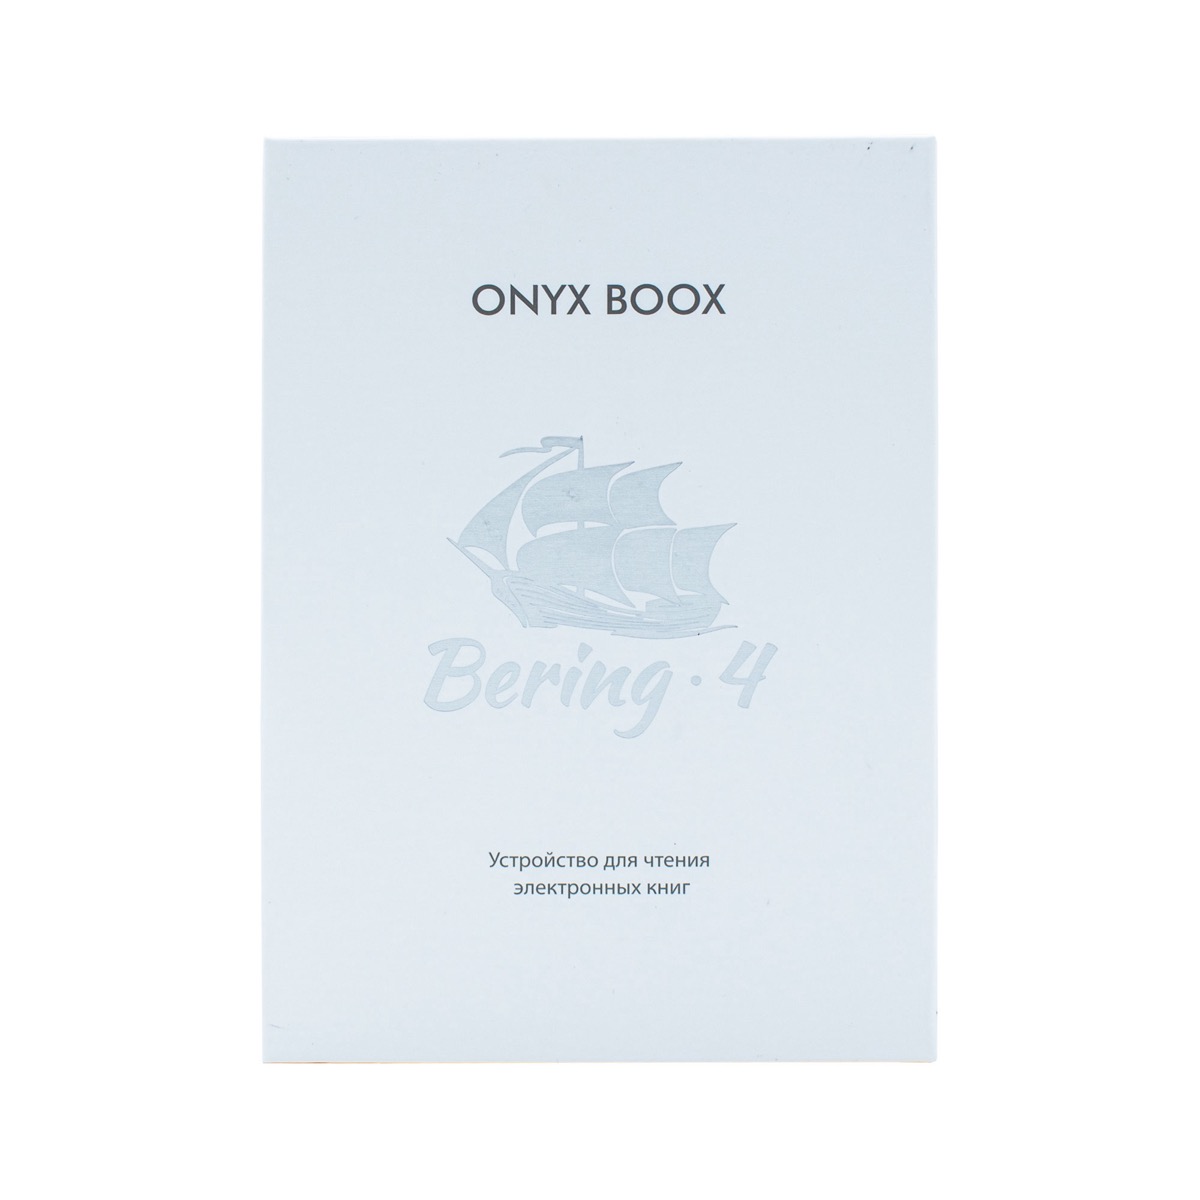 ONYX BOOX Bering 4